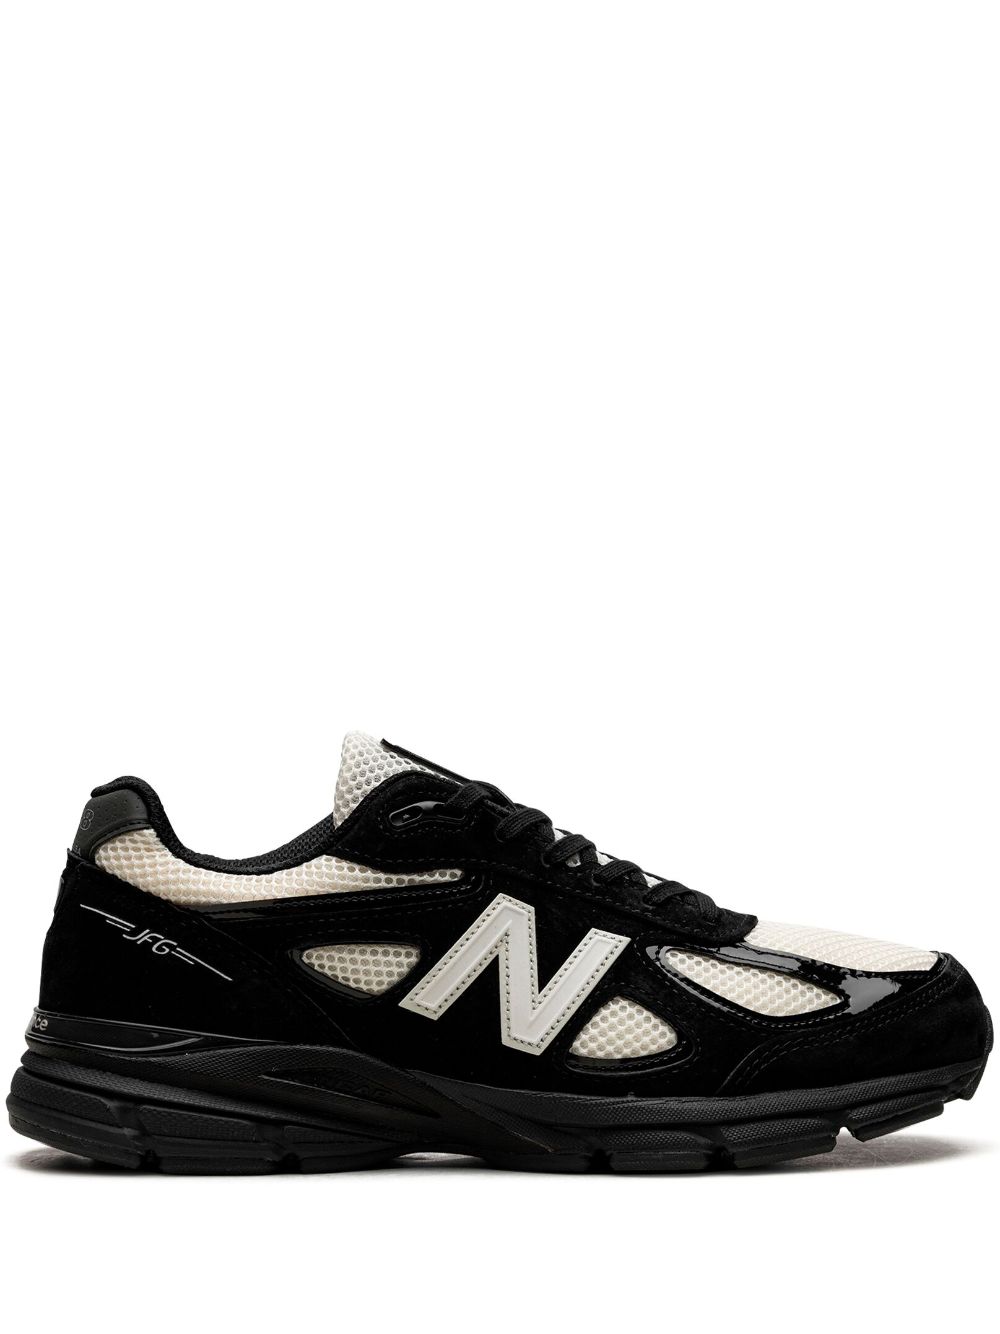 New Balance 990v4 "Joe Freshgoods - Black" sneakers von New Balance